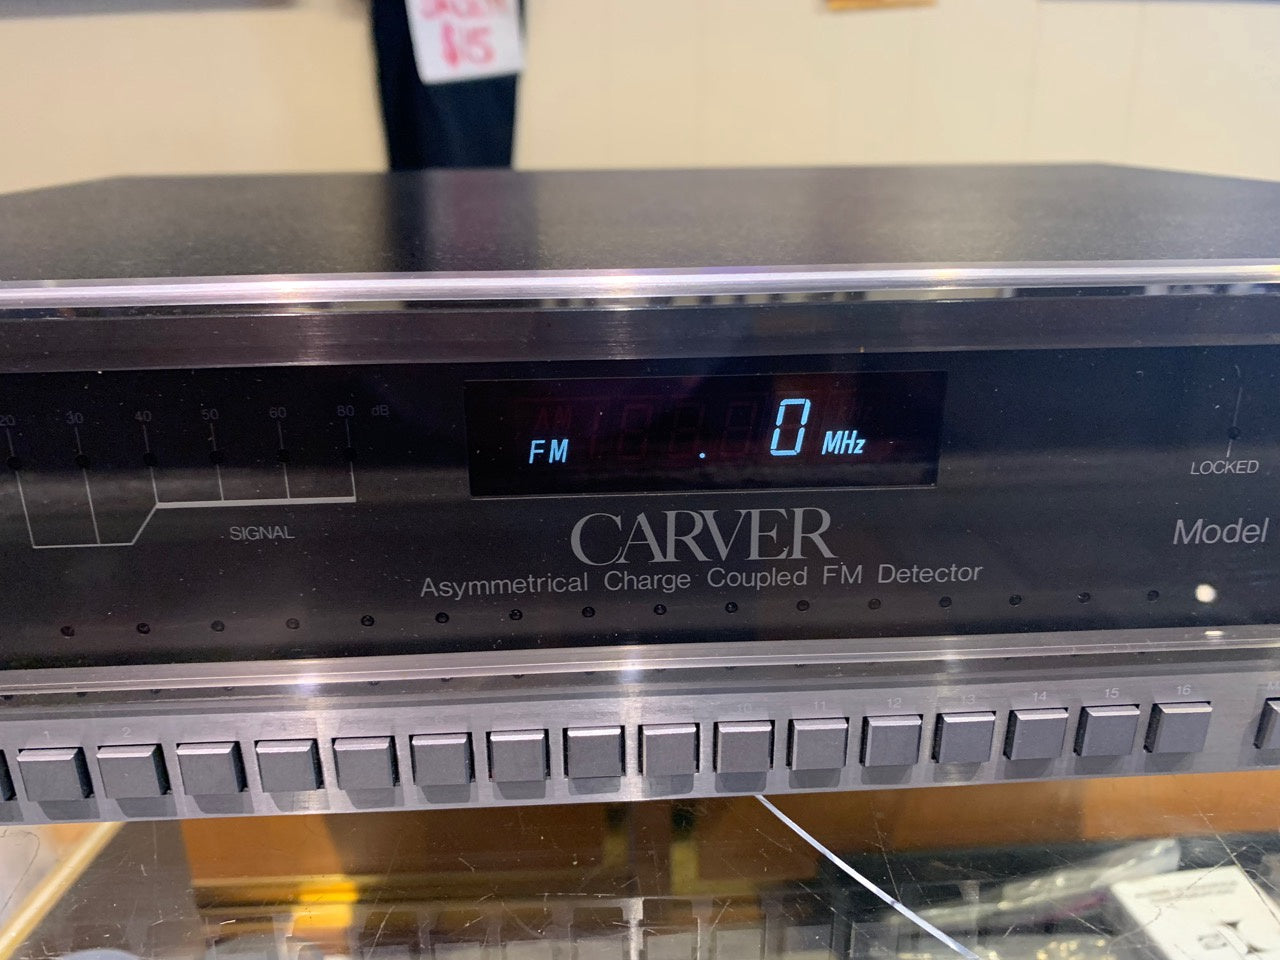 Carver TX-11 Stereo Tuner